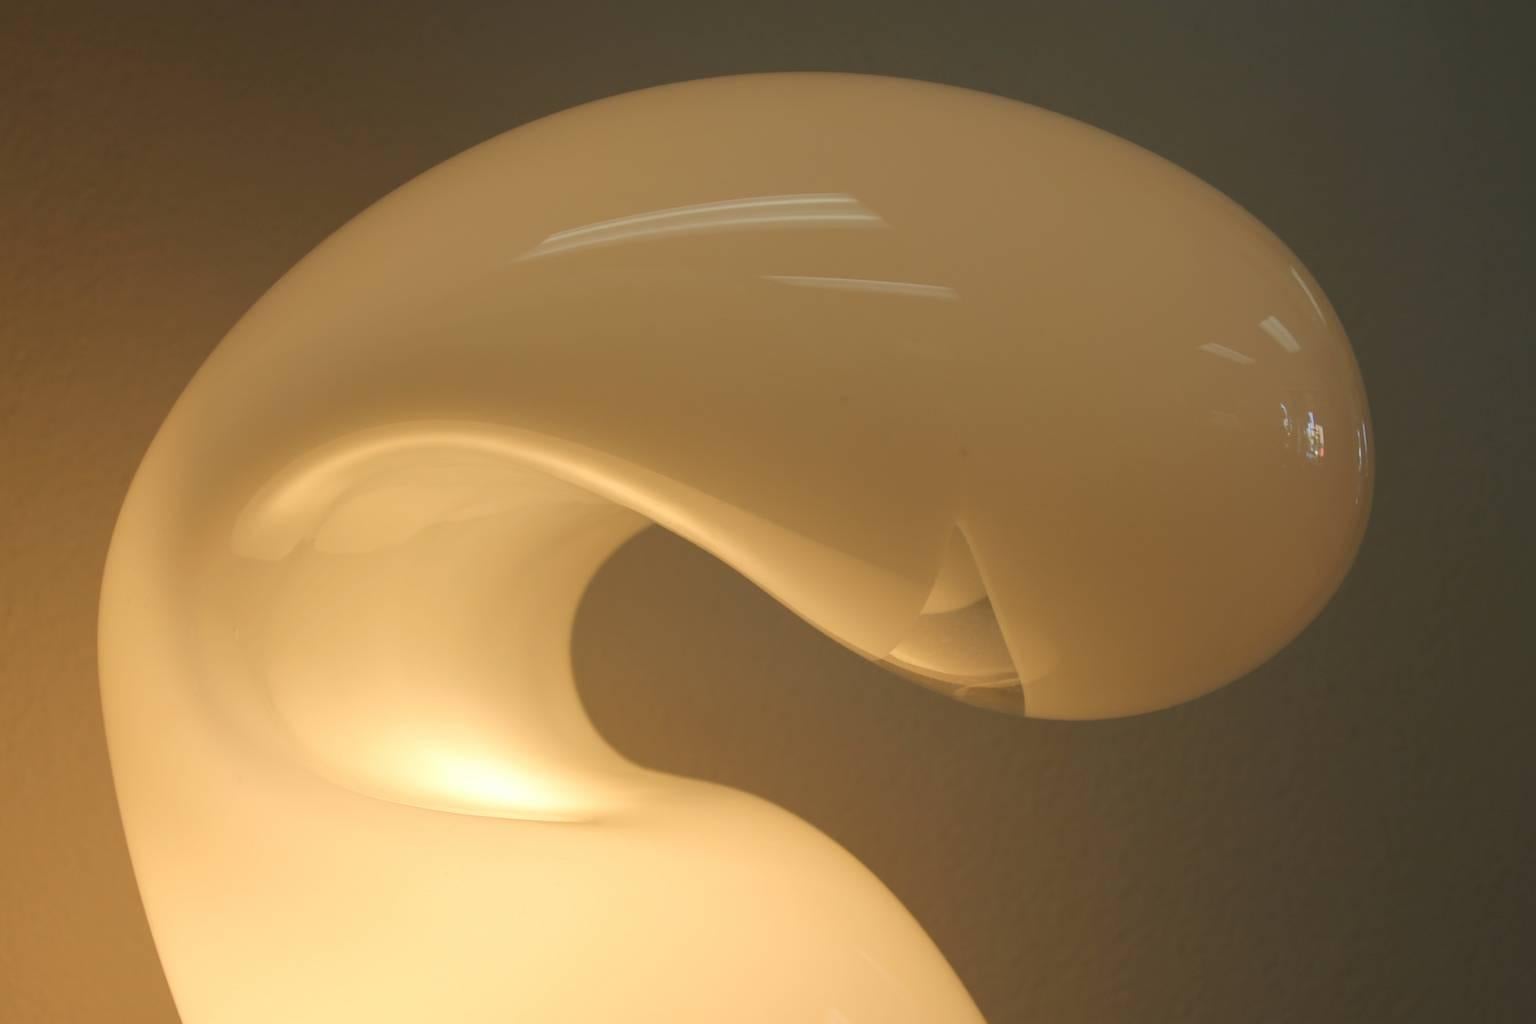 Handblown glass table lamp by Luciano Vistosi.